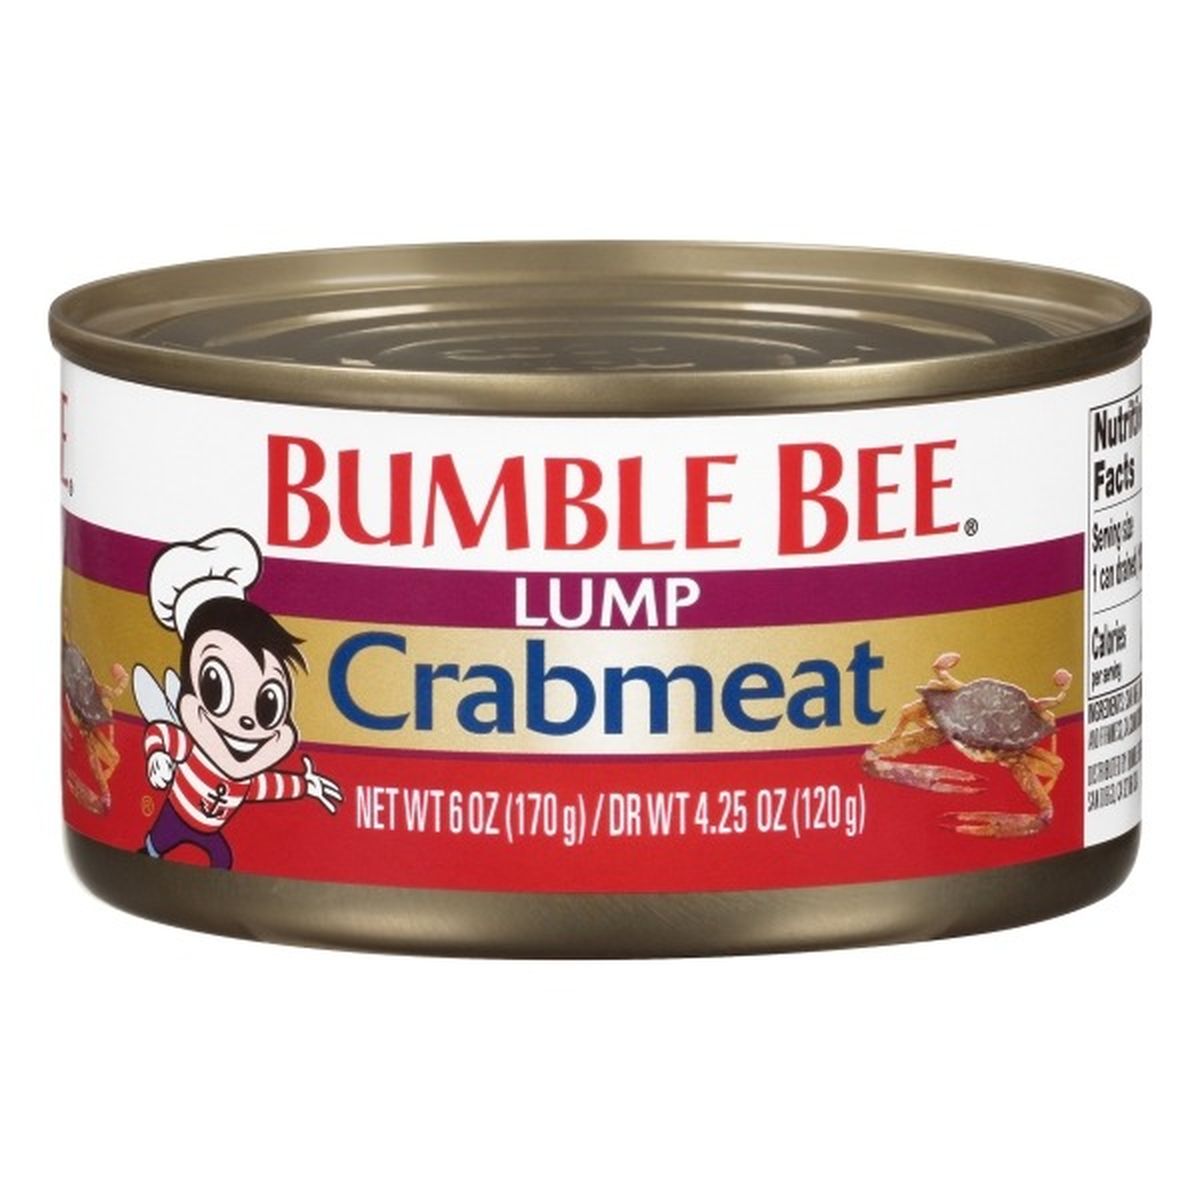 Calories in Bumble Bee Crabmeat, Lump